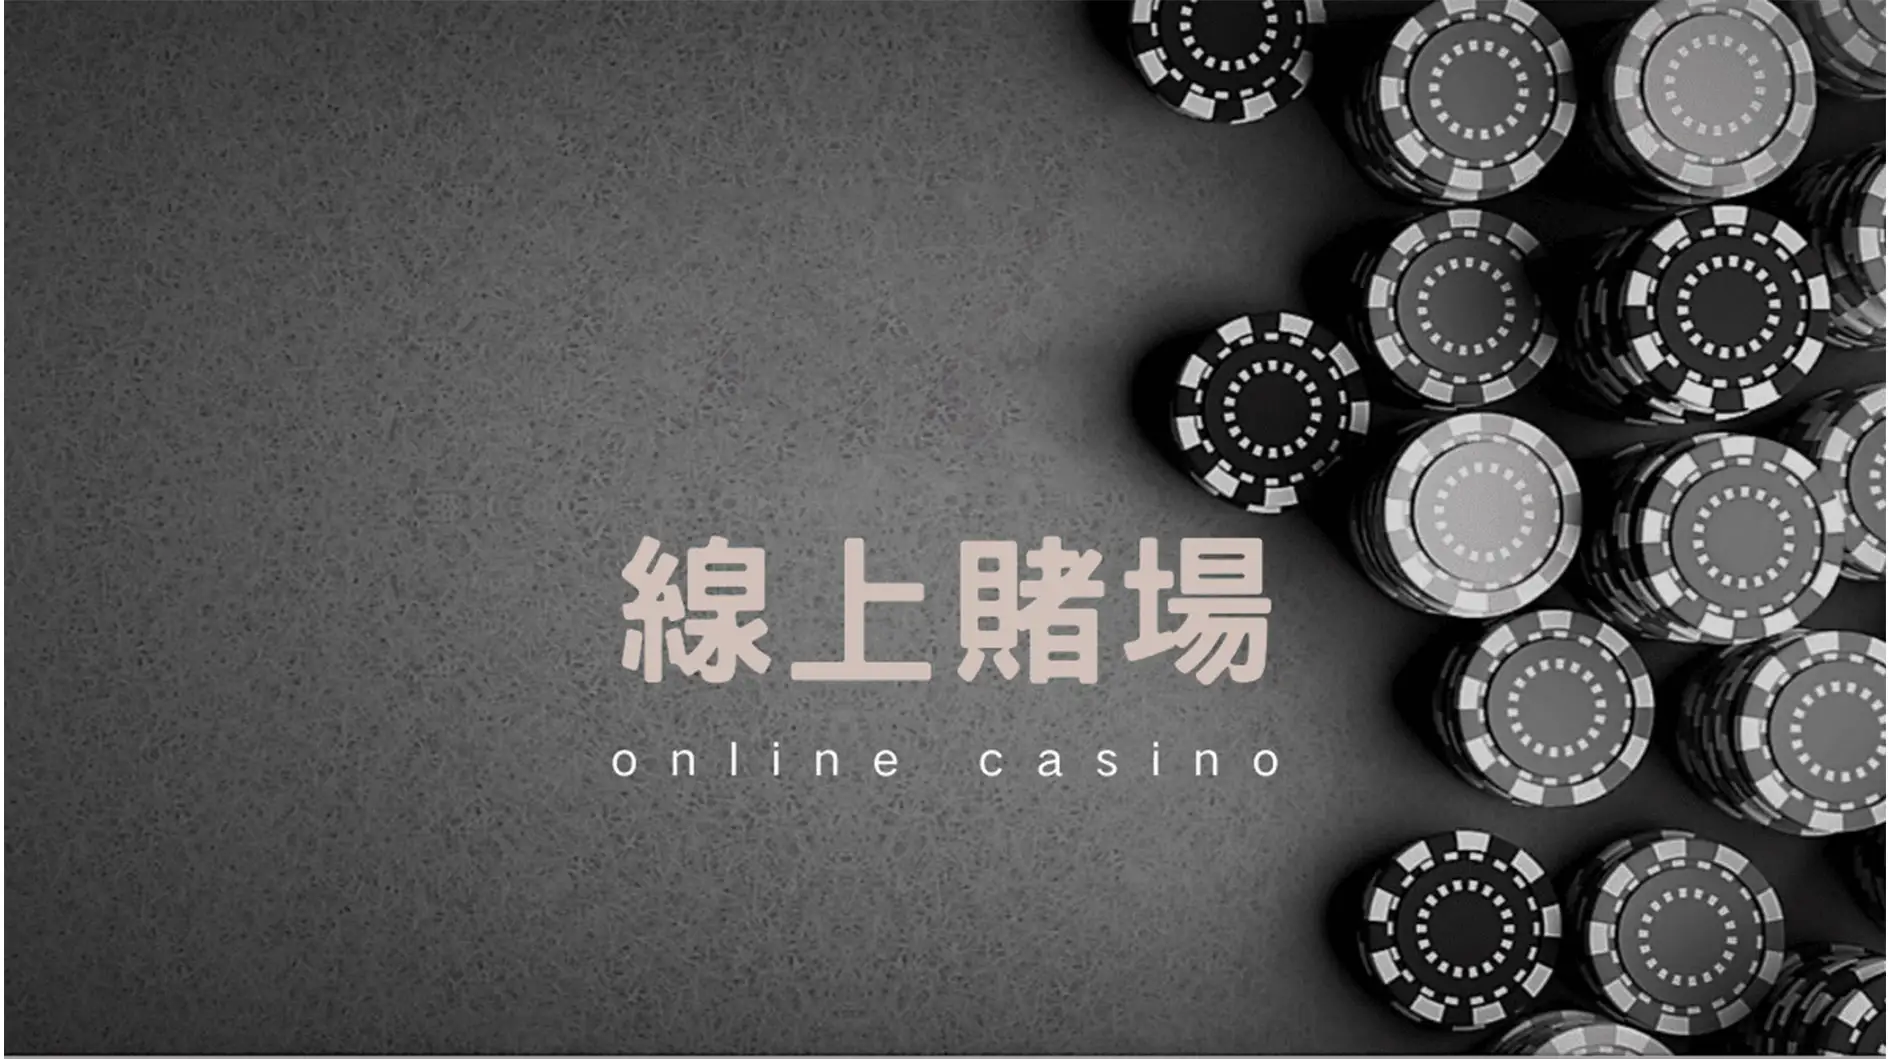 Discover the reliability and strength of BetOne Casino